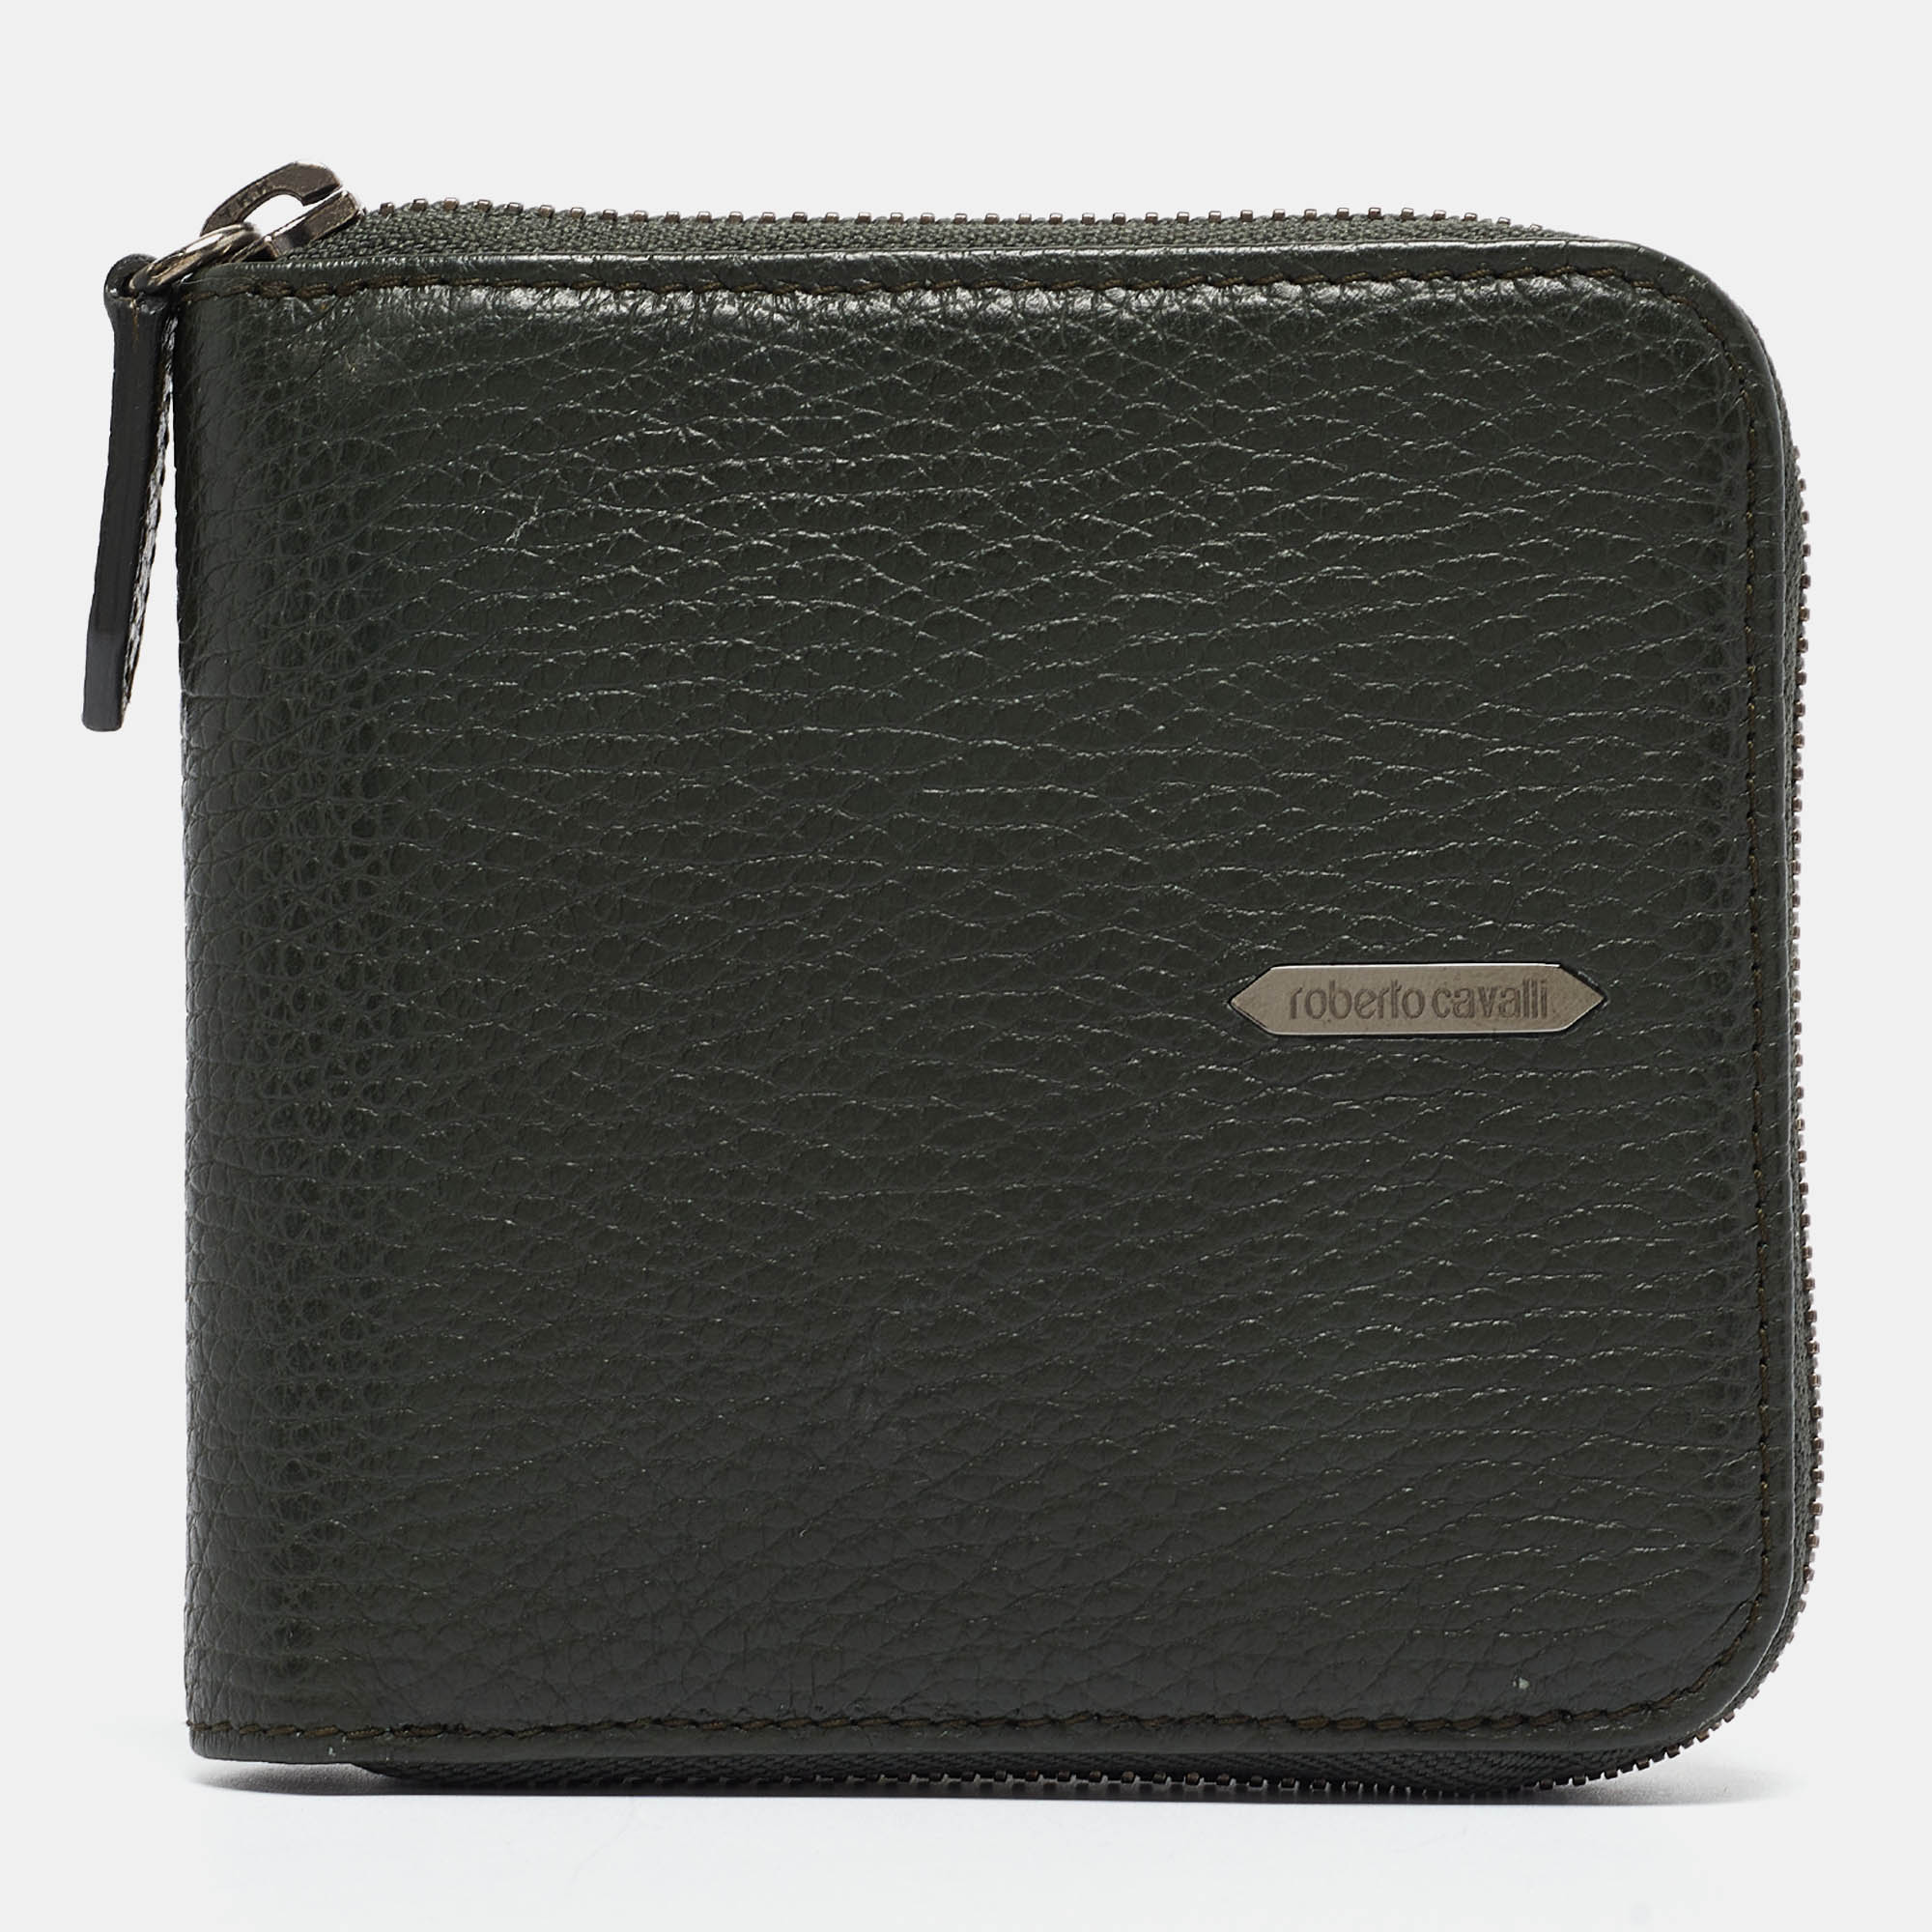 Roberto cavalli dark green leather zip around wallet